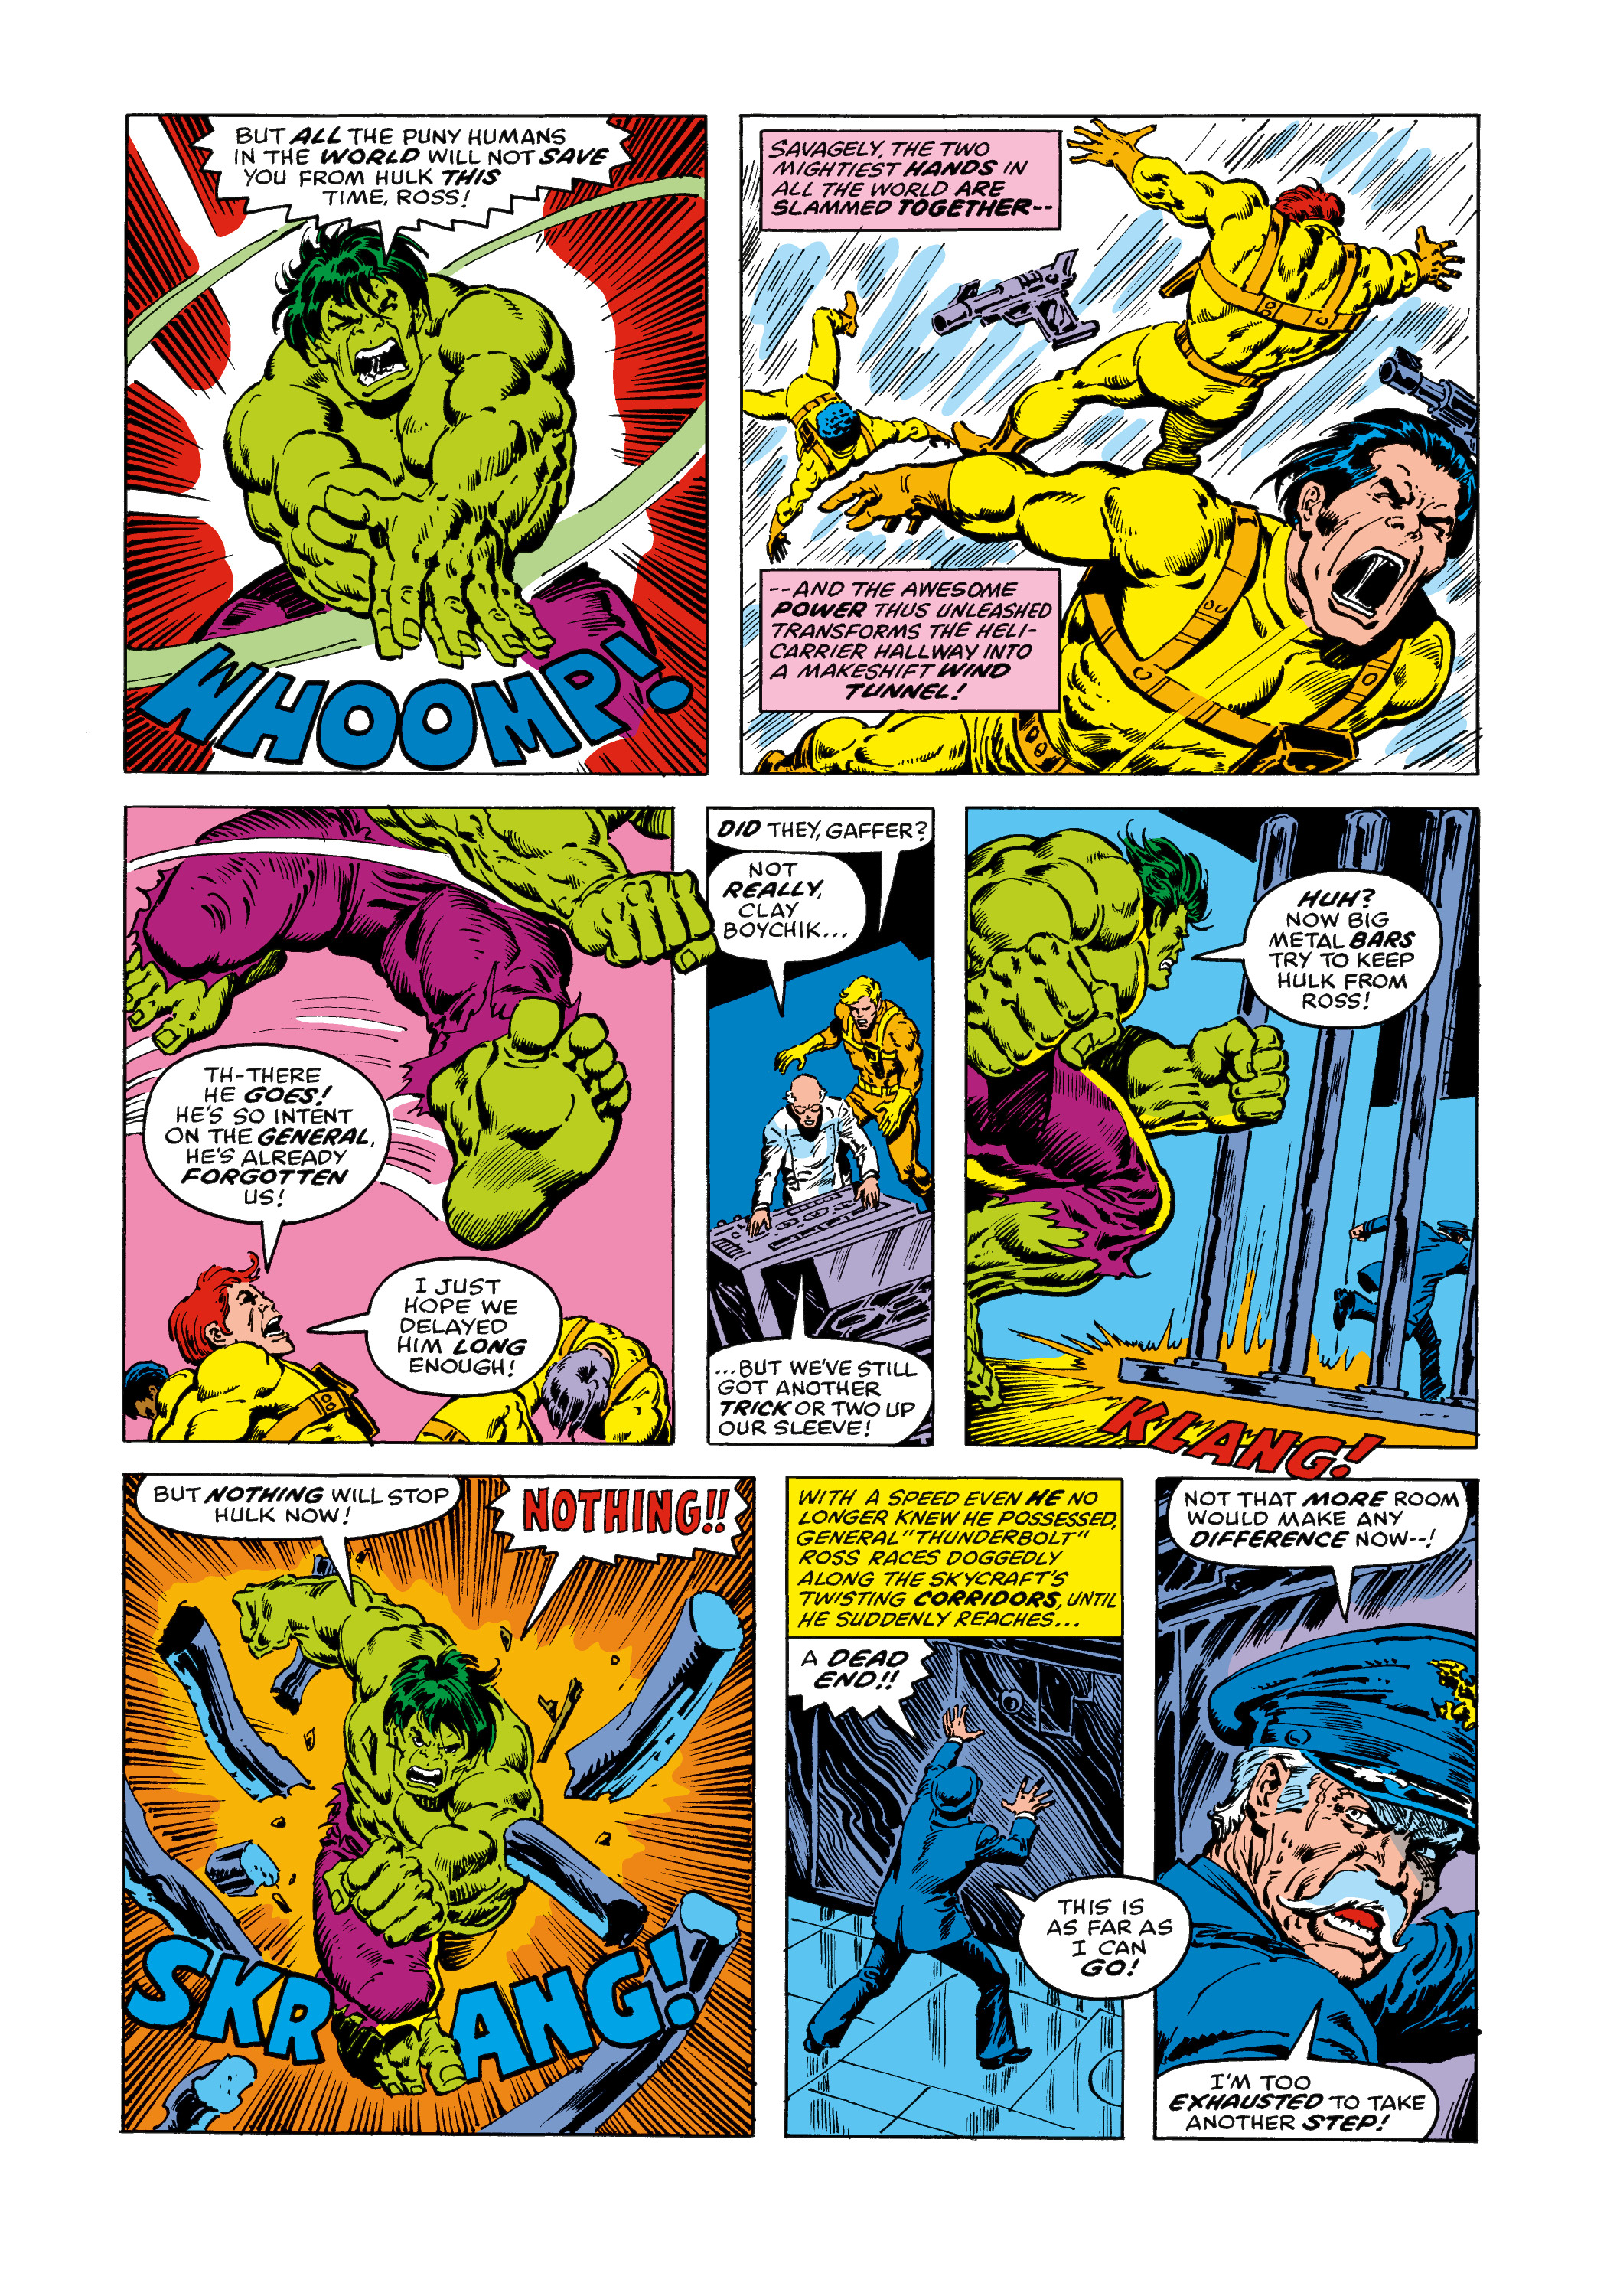 Marvel Masterworks The Incredible Hulk 13  